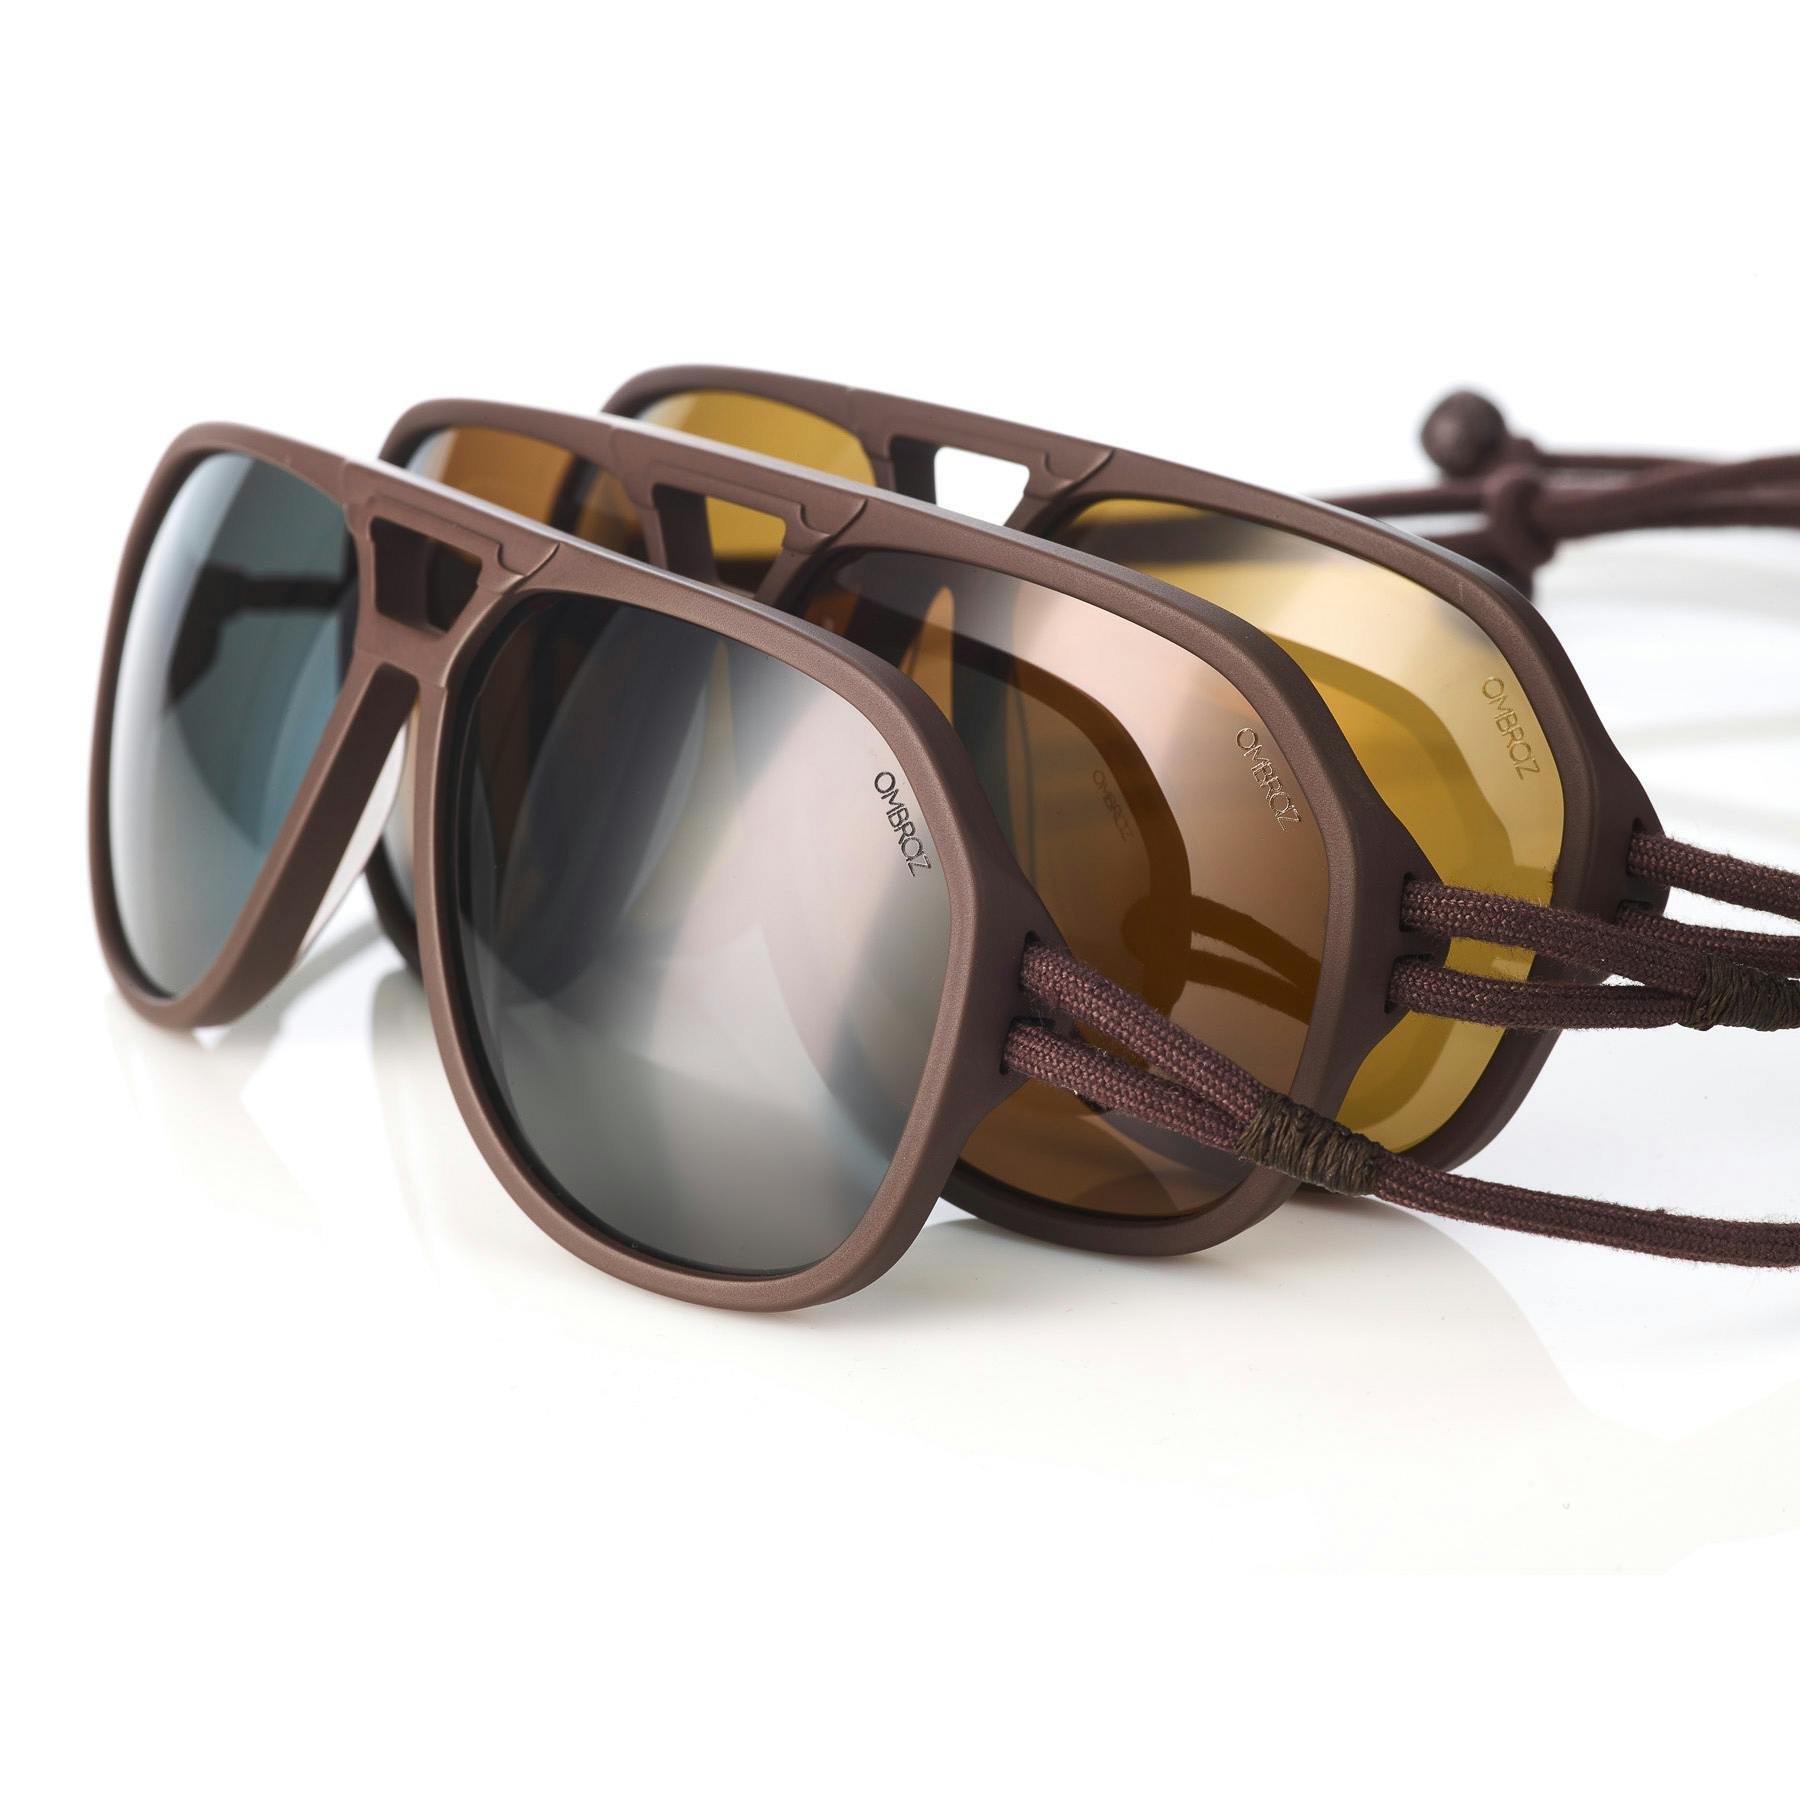 Classics, Ombraz Armless Sunglasses, Ideal Sunglasses For Round Face